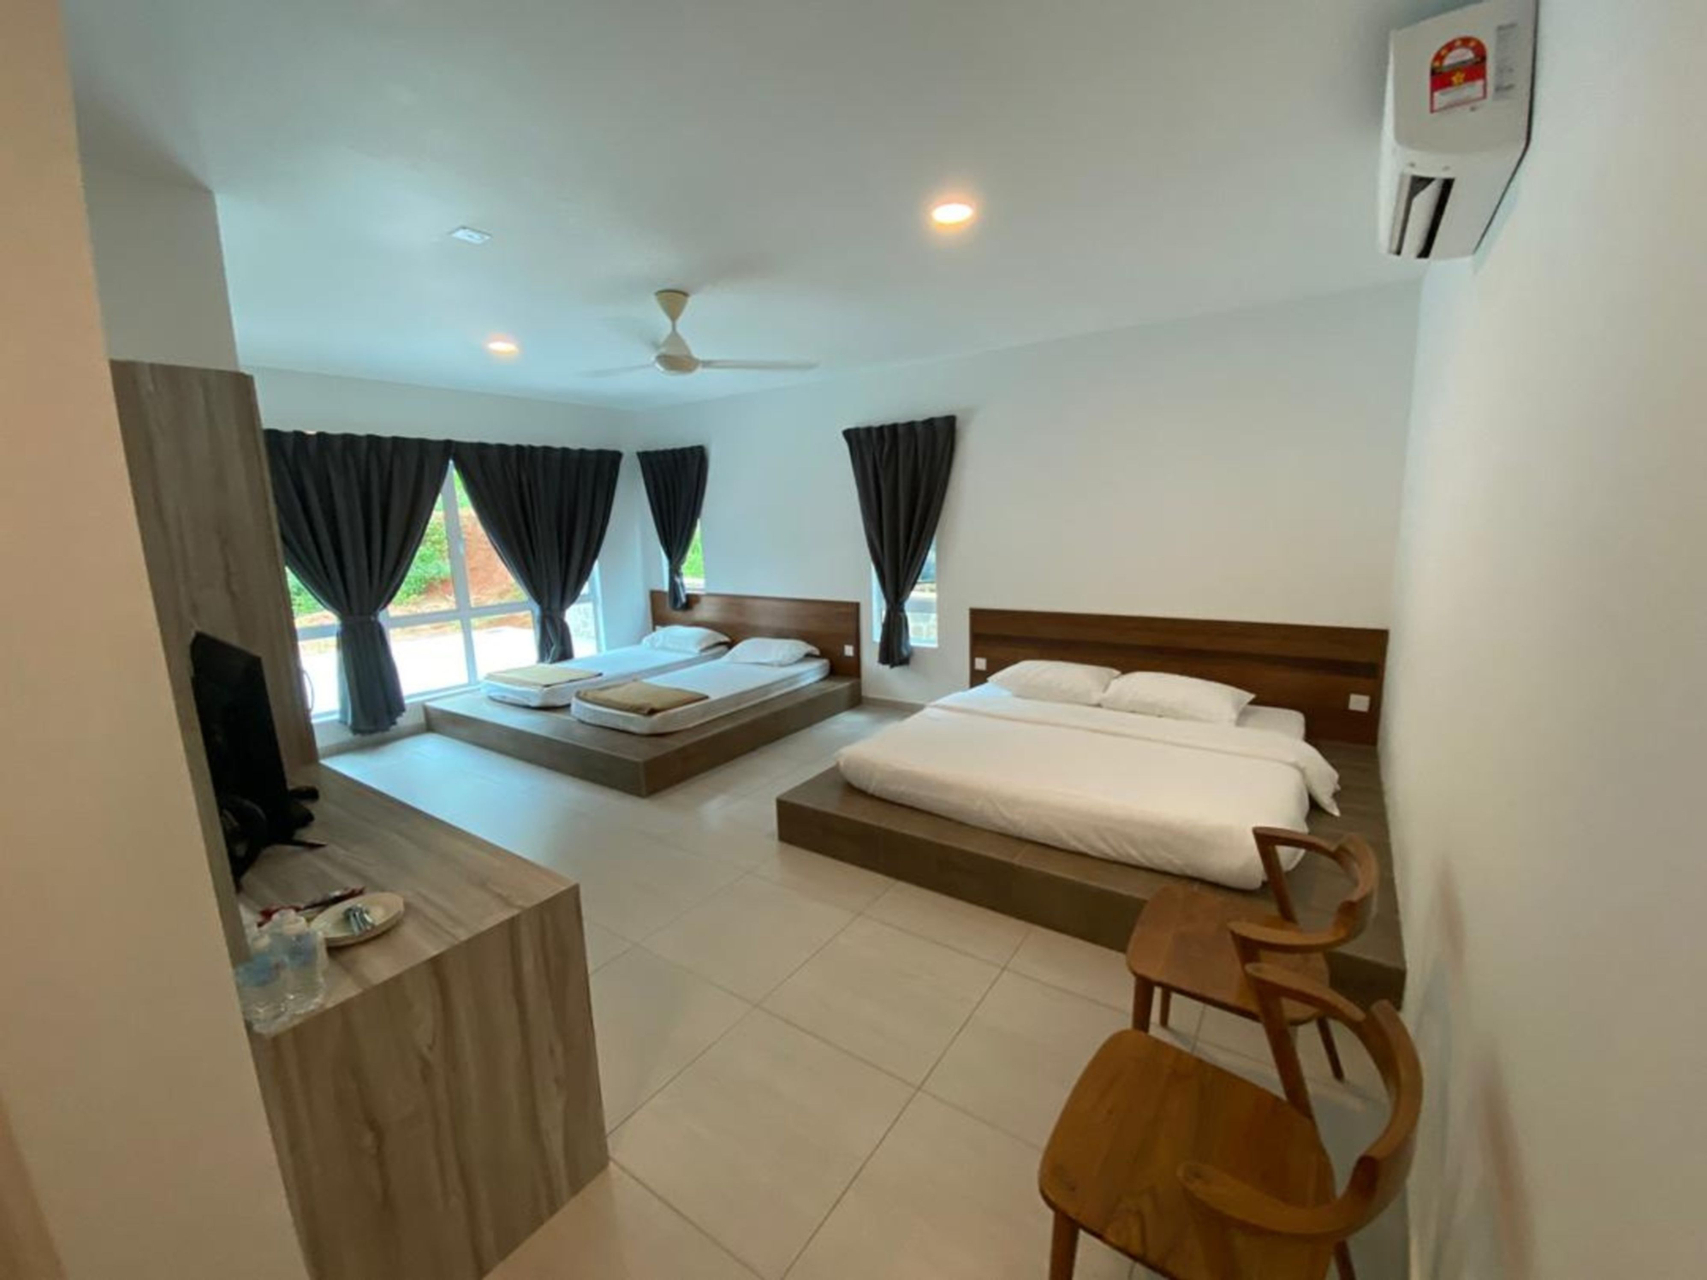 Bedroom 2, Paradise Valley Resort Broga, Hulu Langat